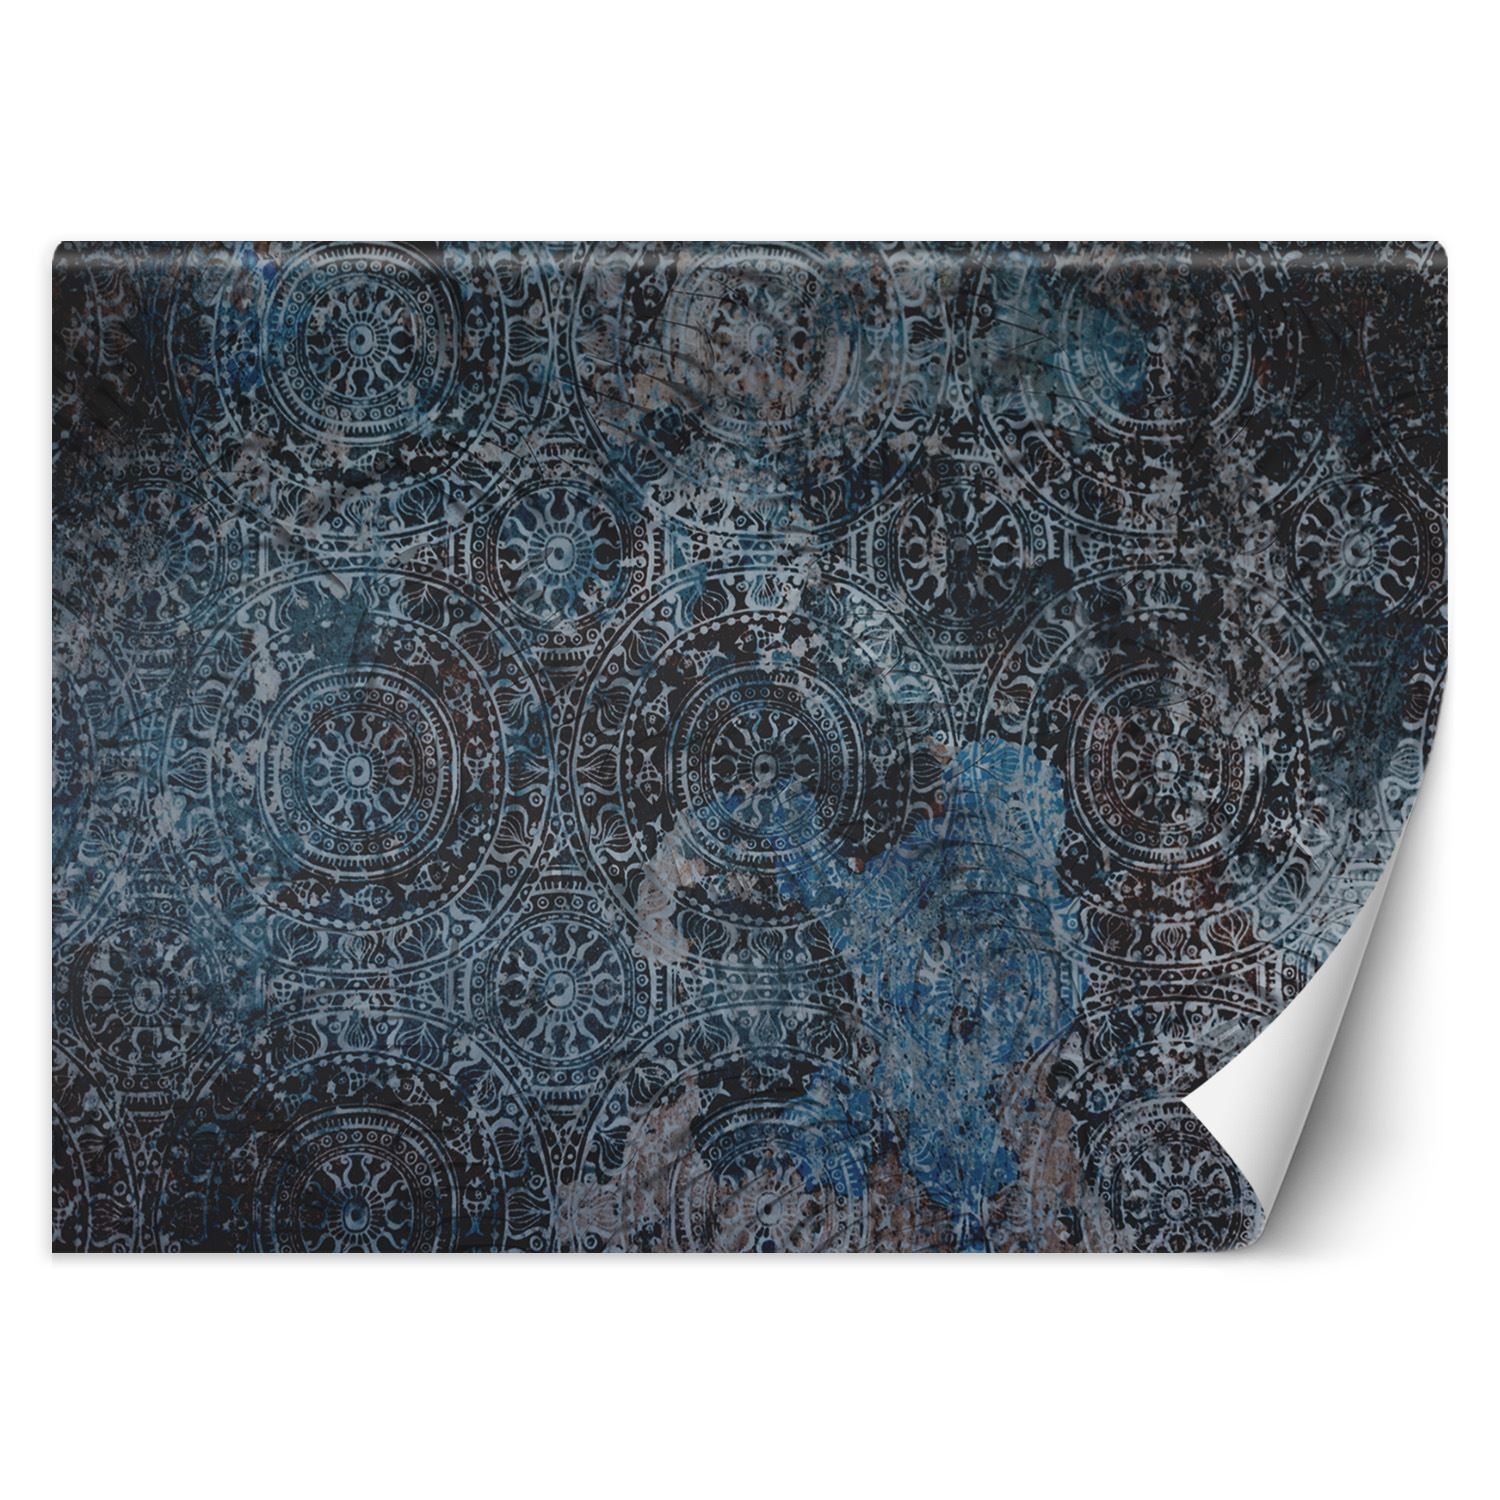 Trend24 – Behang – Mandala Vintage – Behangpapier – Behang Woonkamer – Fotobehang – 450x315x2 cm – Incl. behanglijm